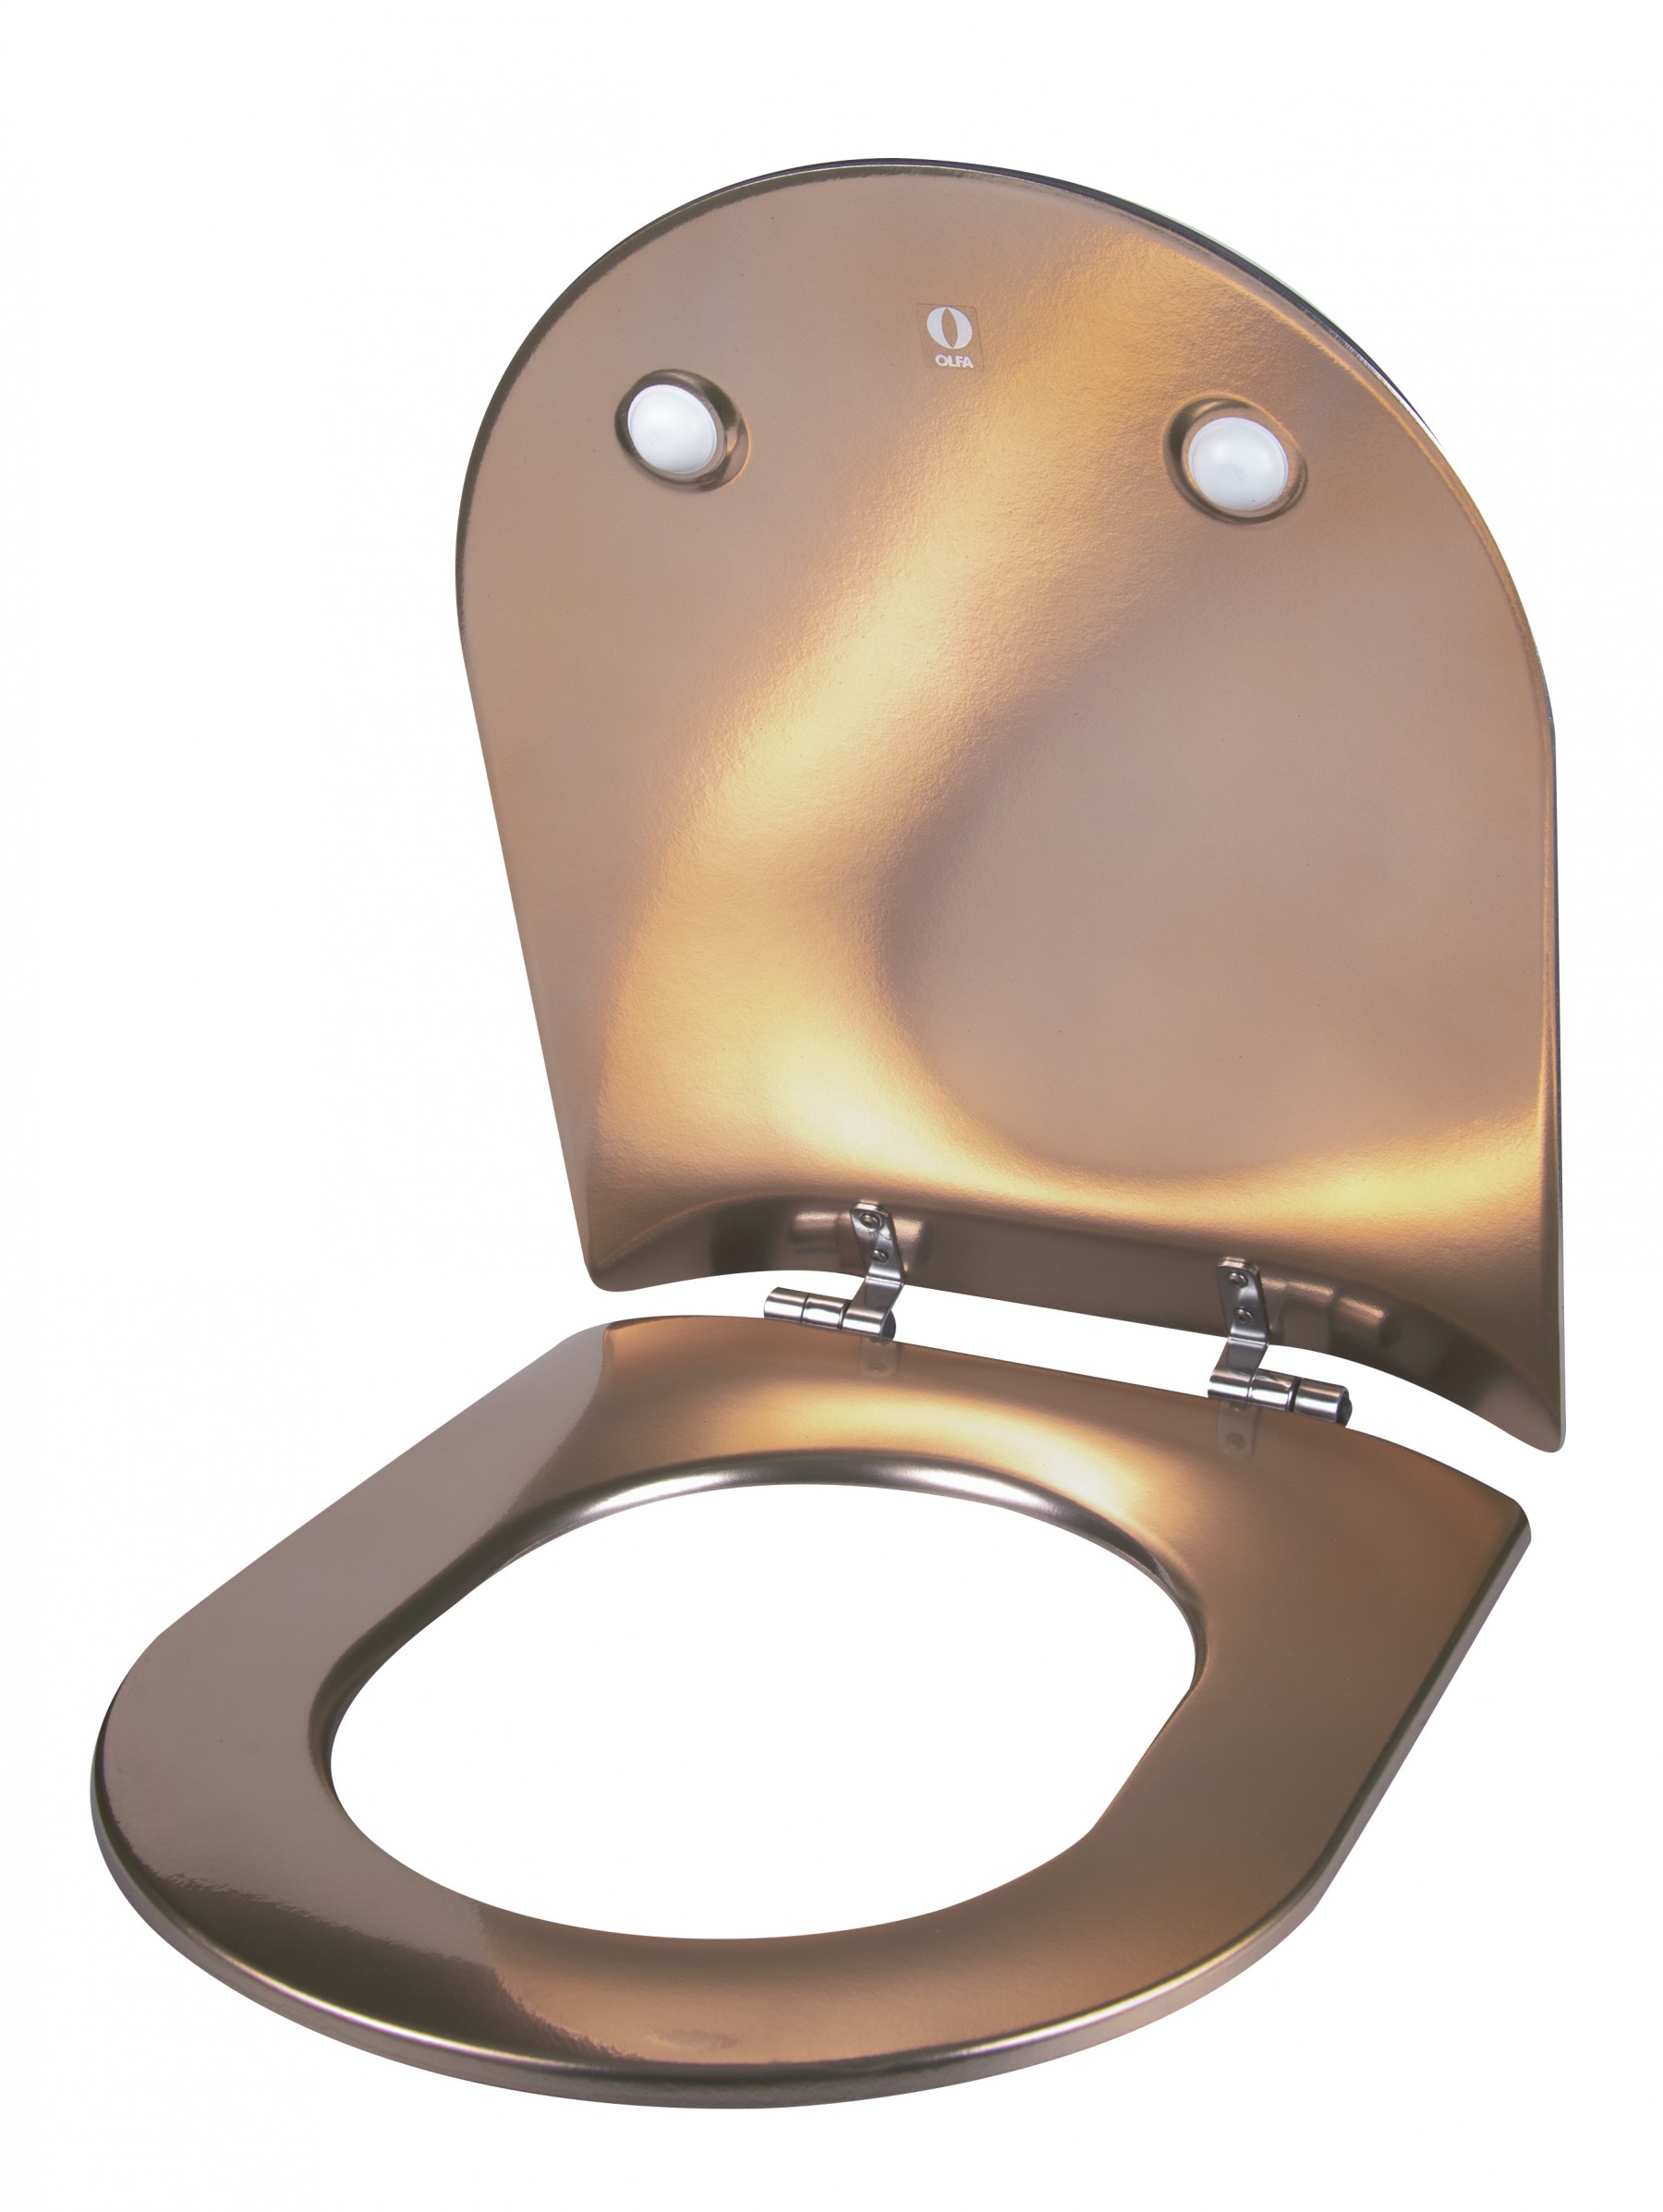 Abattant WC WOOD SLIM Reflet Cuivre - Olfa - Olfa, expert en toilettes